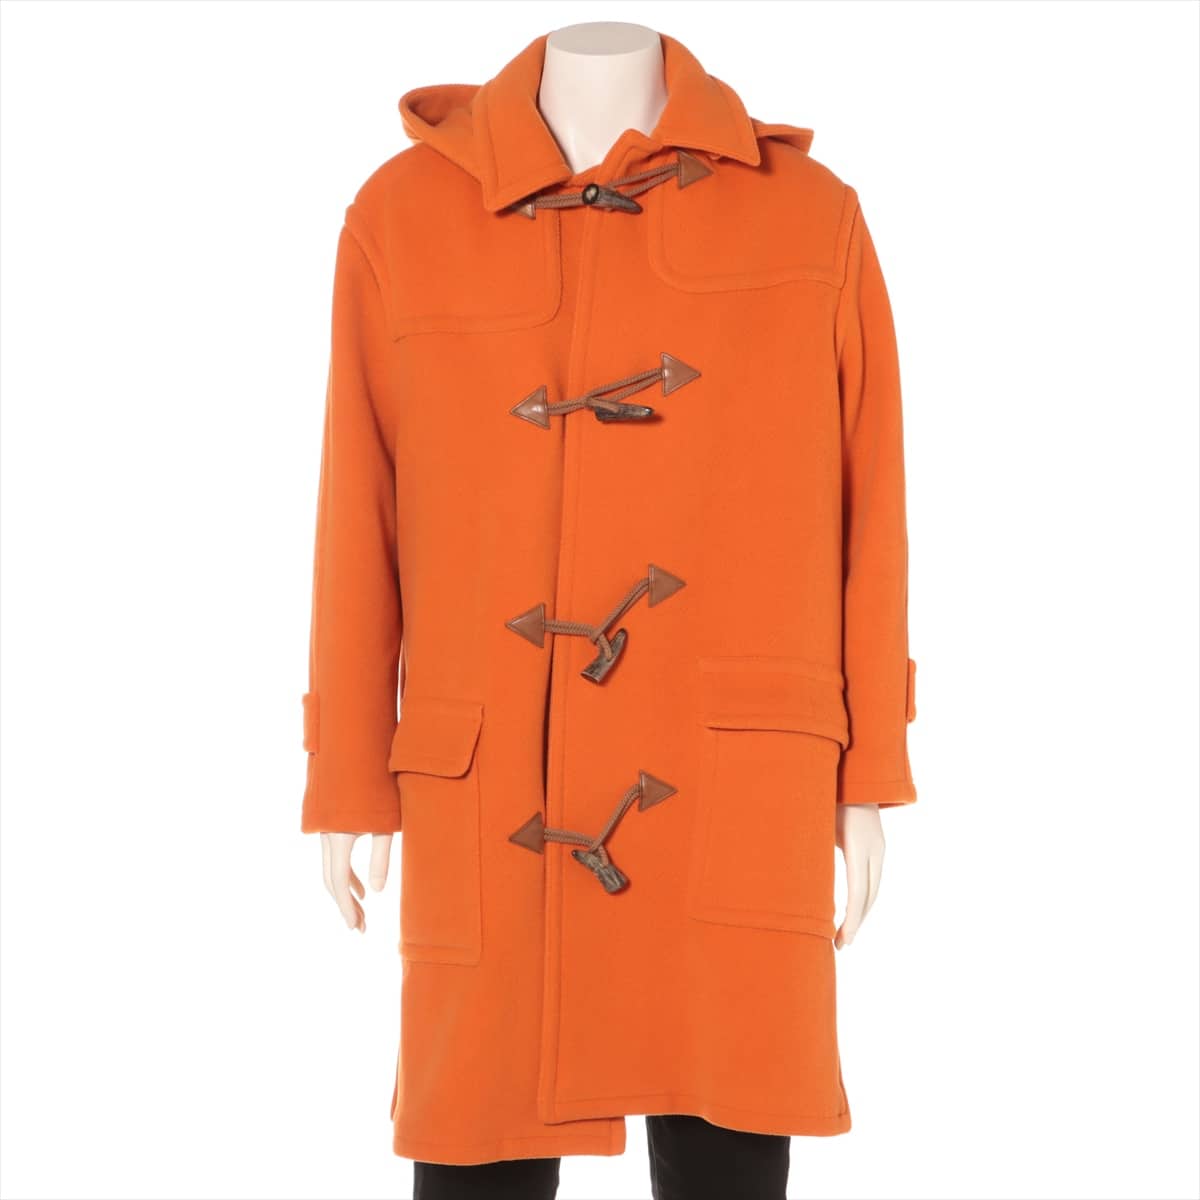 Hermès Wool Duffel coat 48 Men's Orange  Removable hood